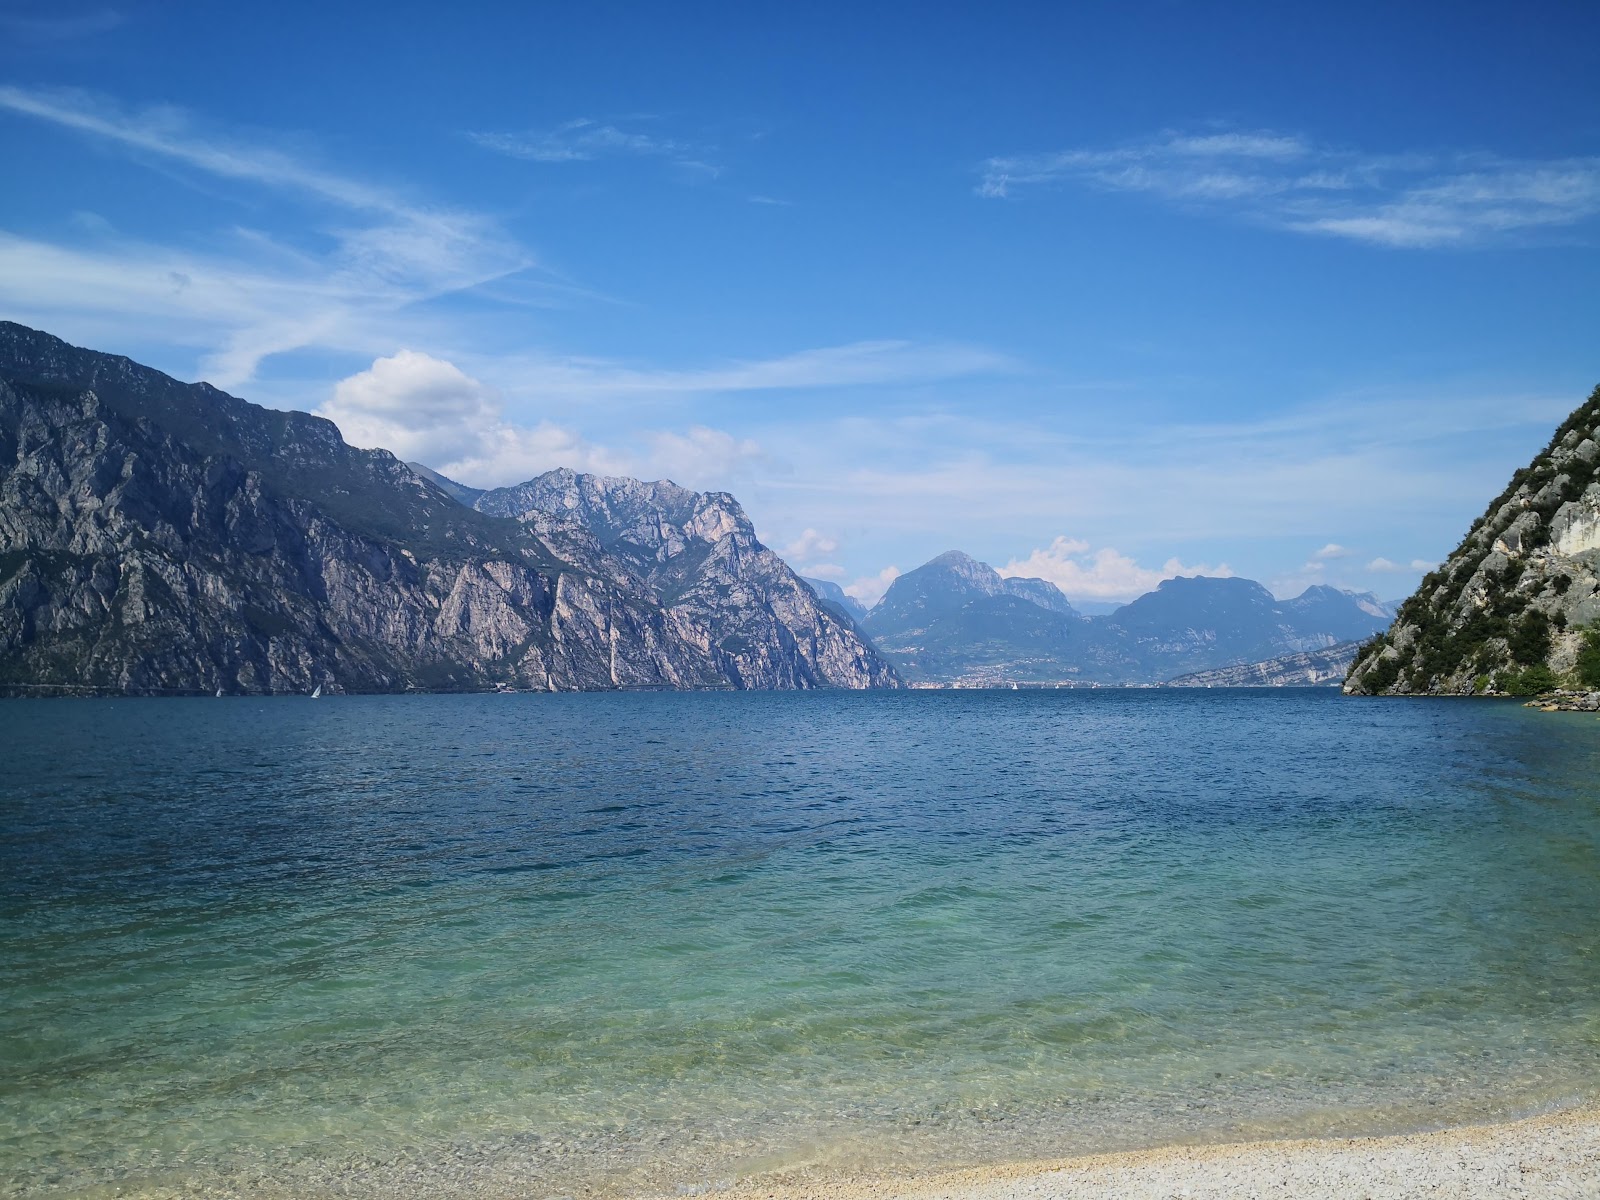 Spiaggia Baitone的照片 带有碧绿色纯水表面